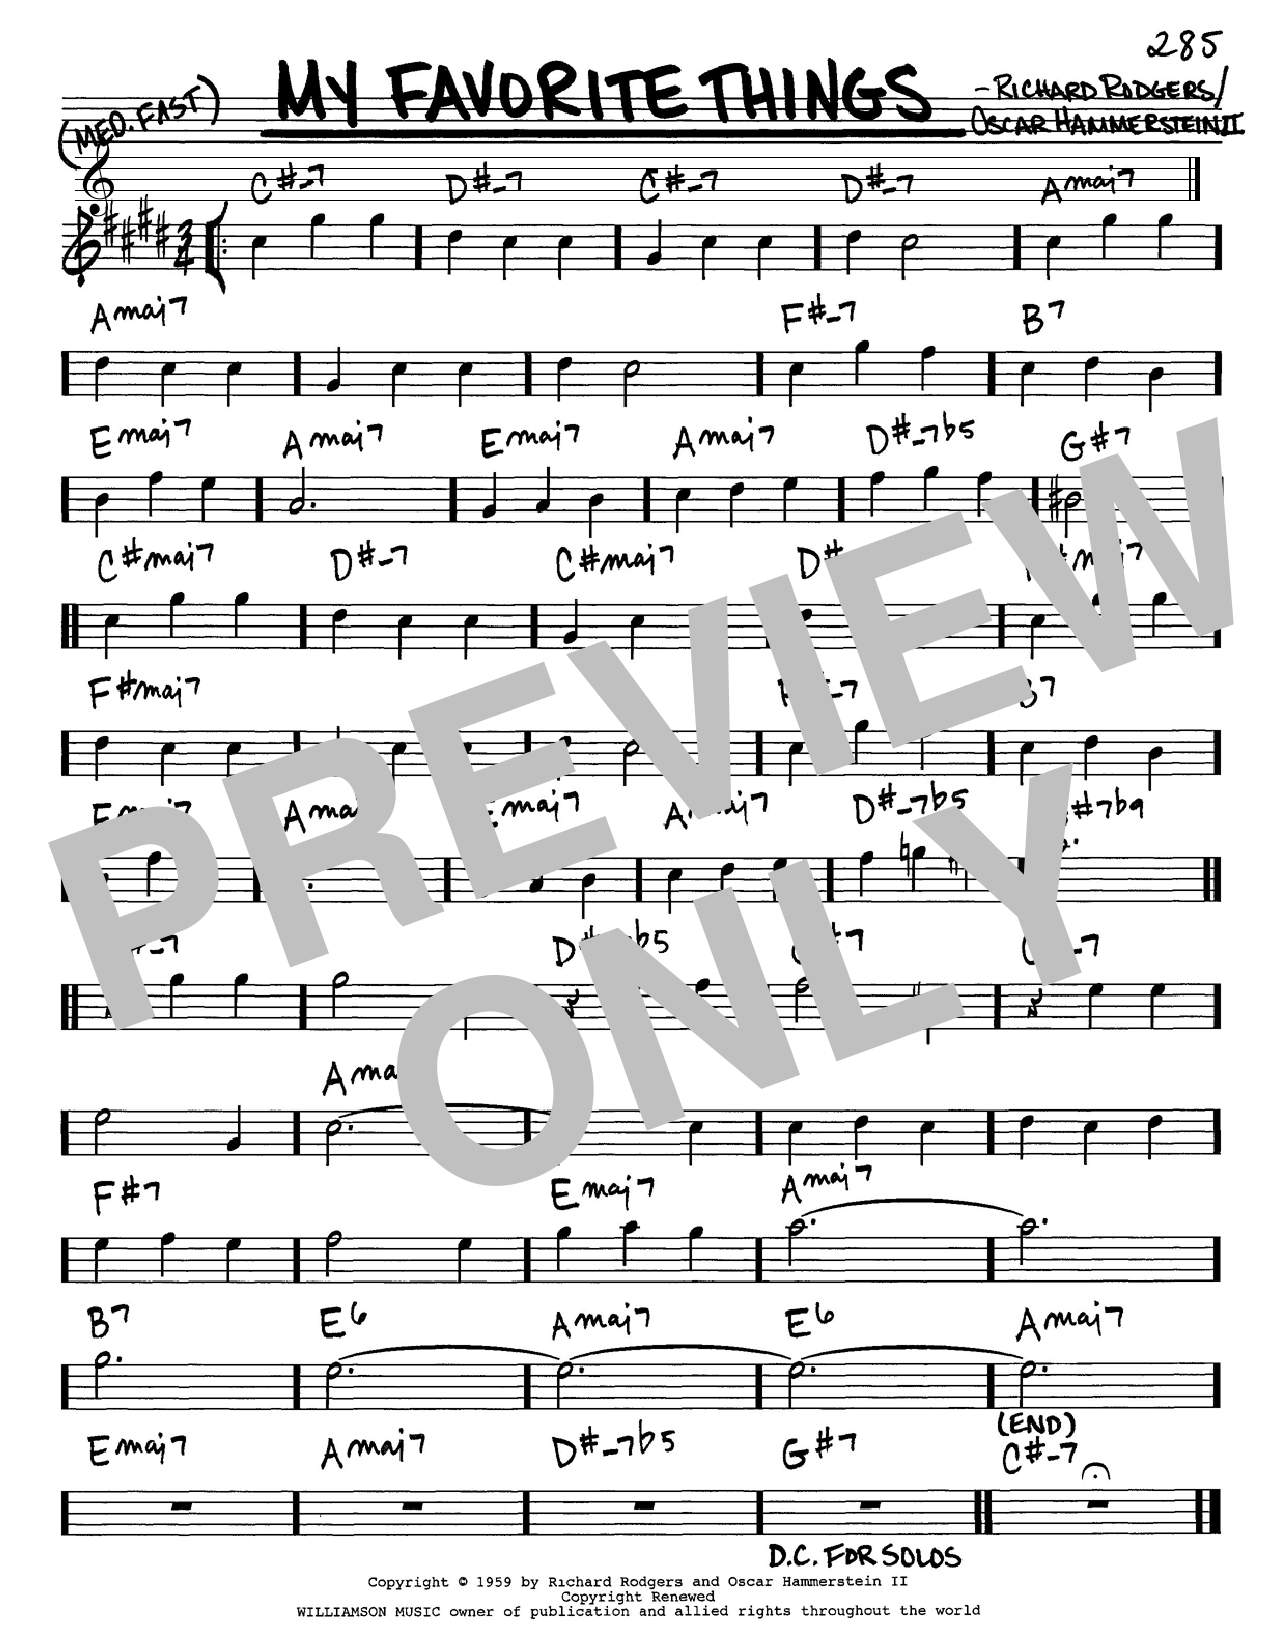 pdf john coltrane my favorite things sheet music